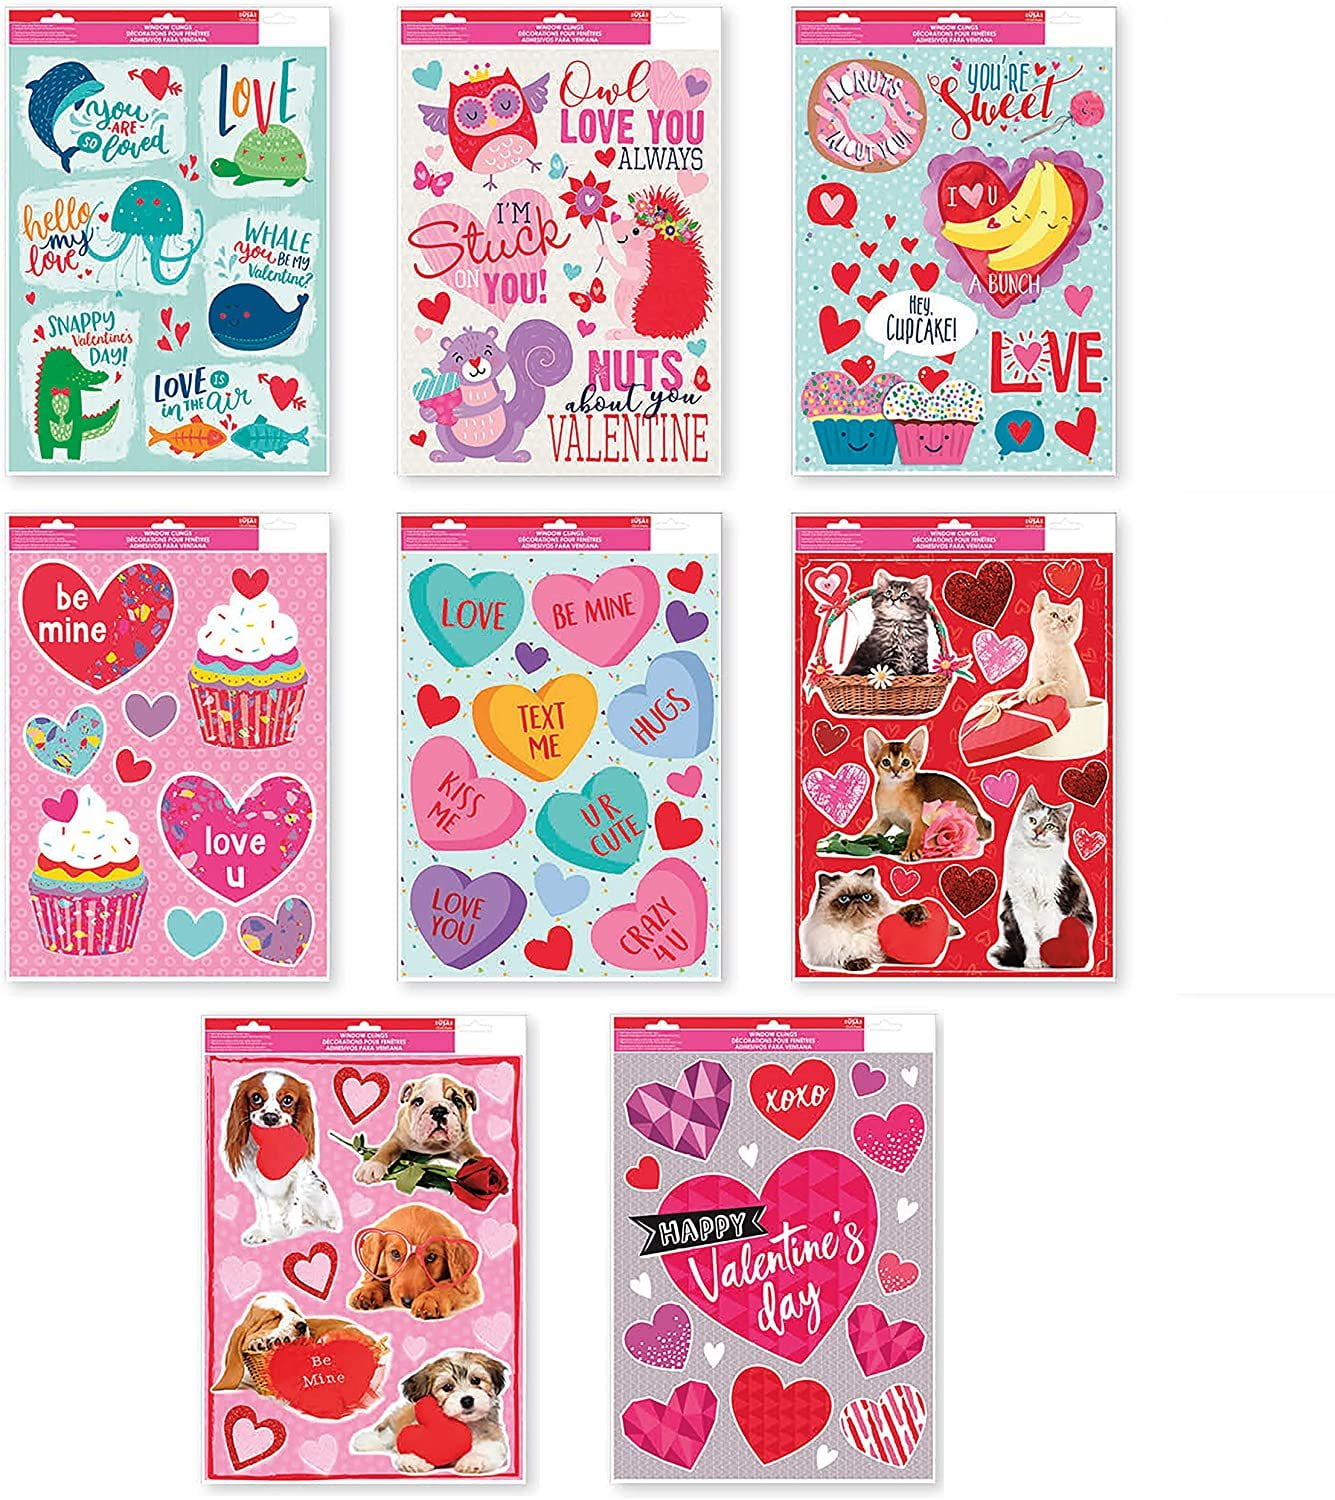 Happy Valentines Day & Hearts Glitter Window Sticker Decorations x 17 